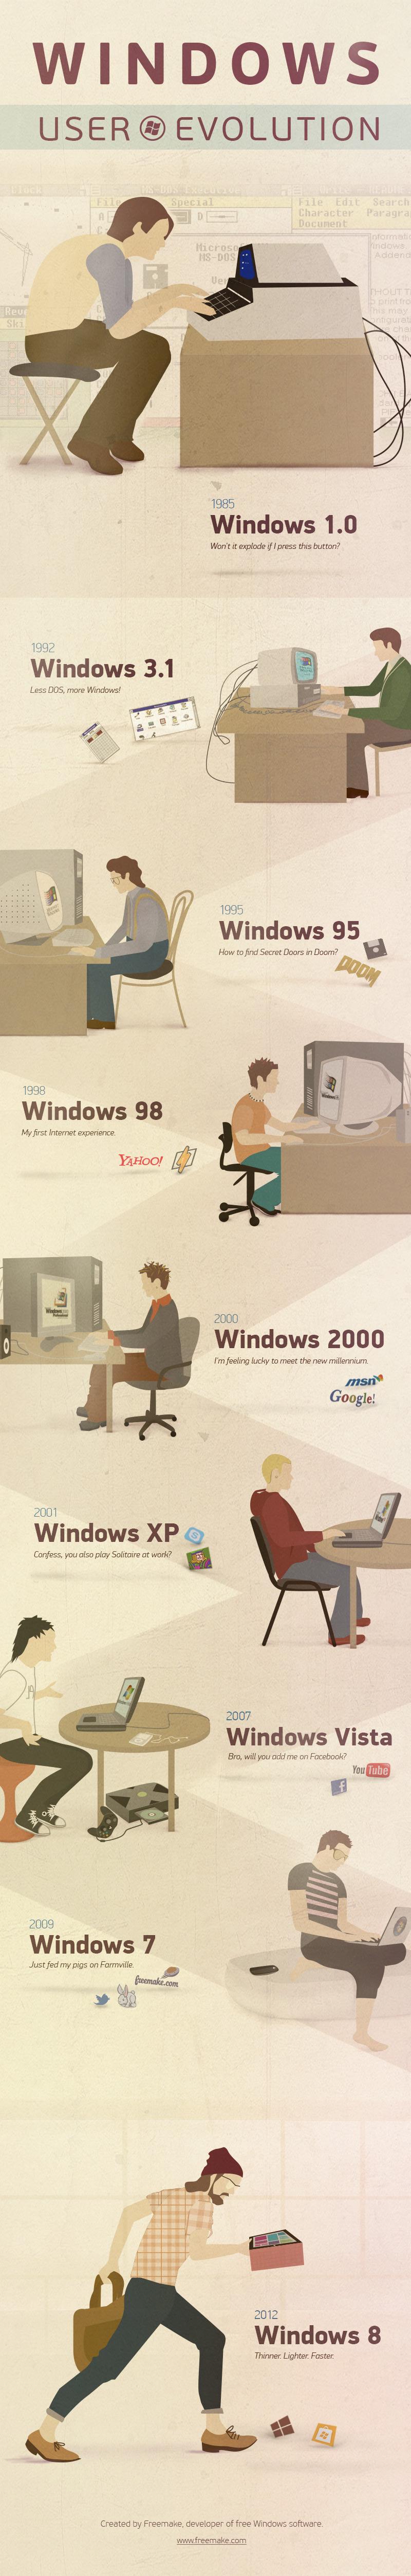 Windows-user-evolution-infographic